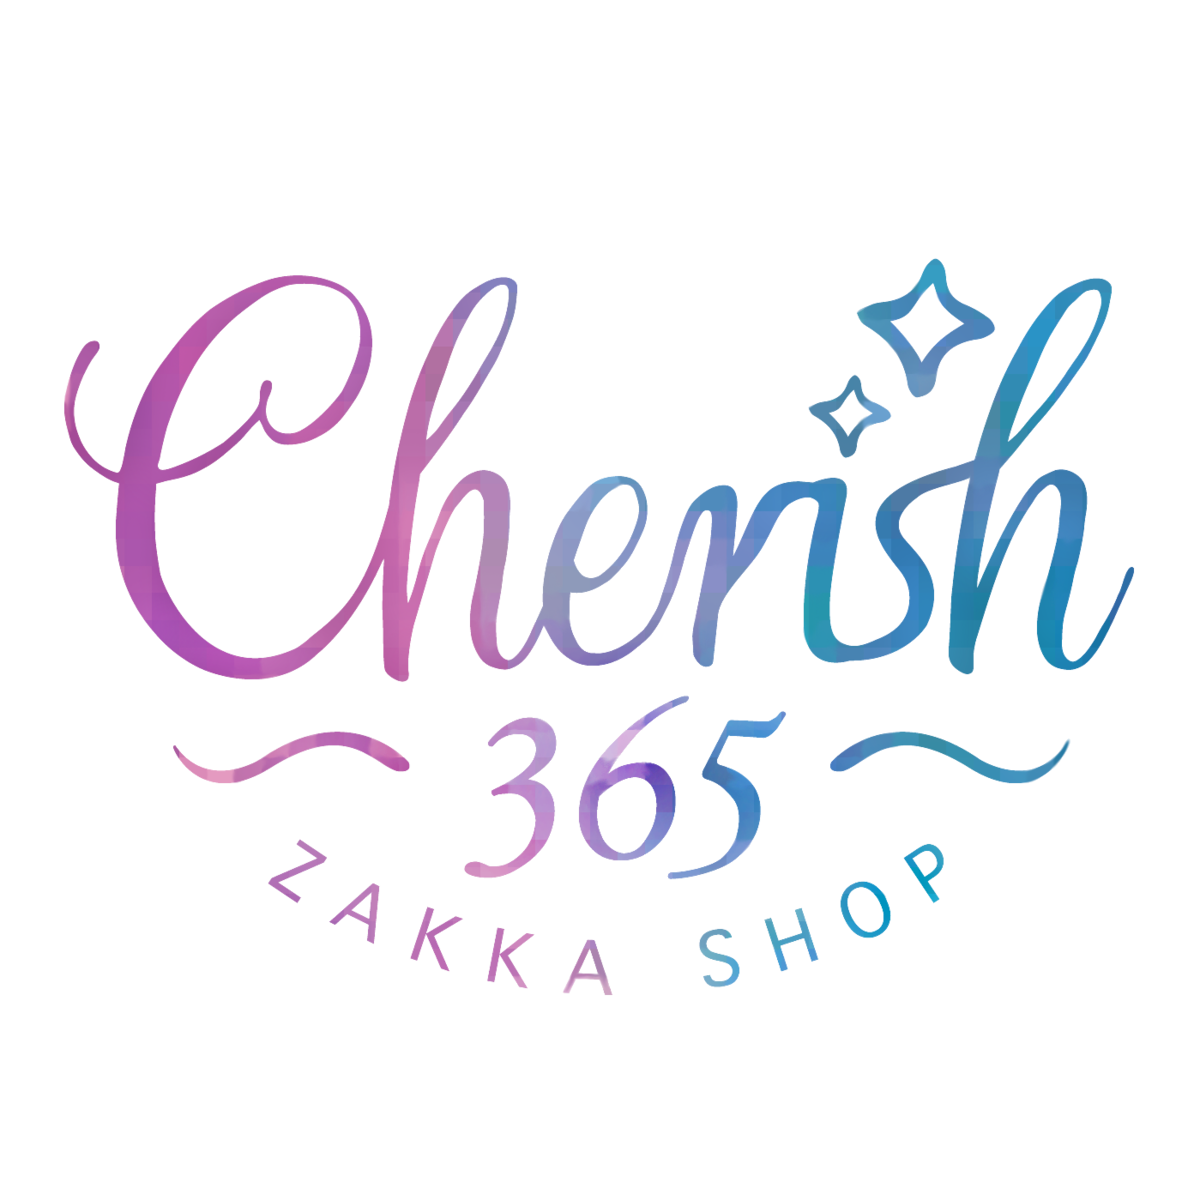 Cherish365 Zakka